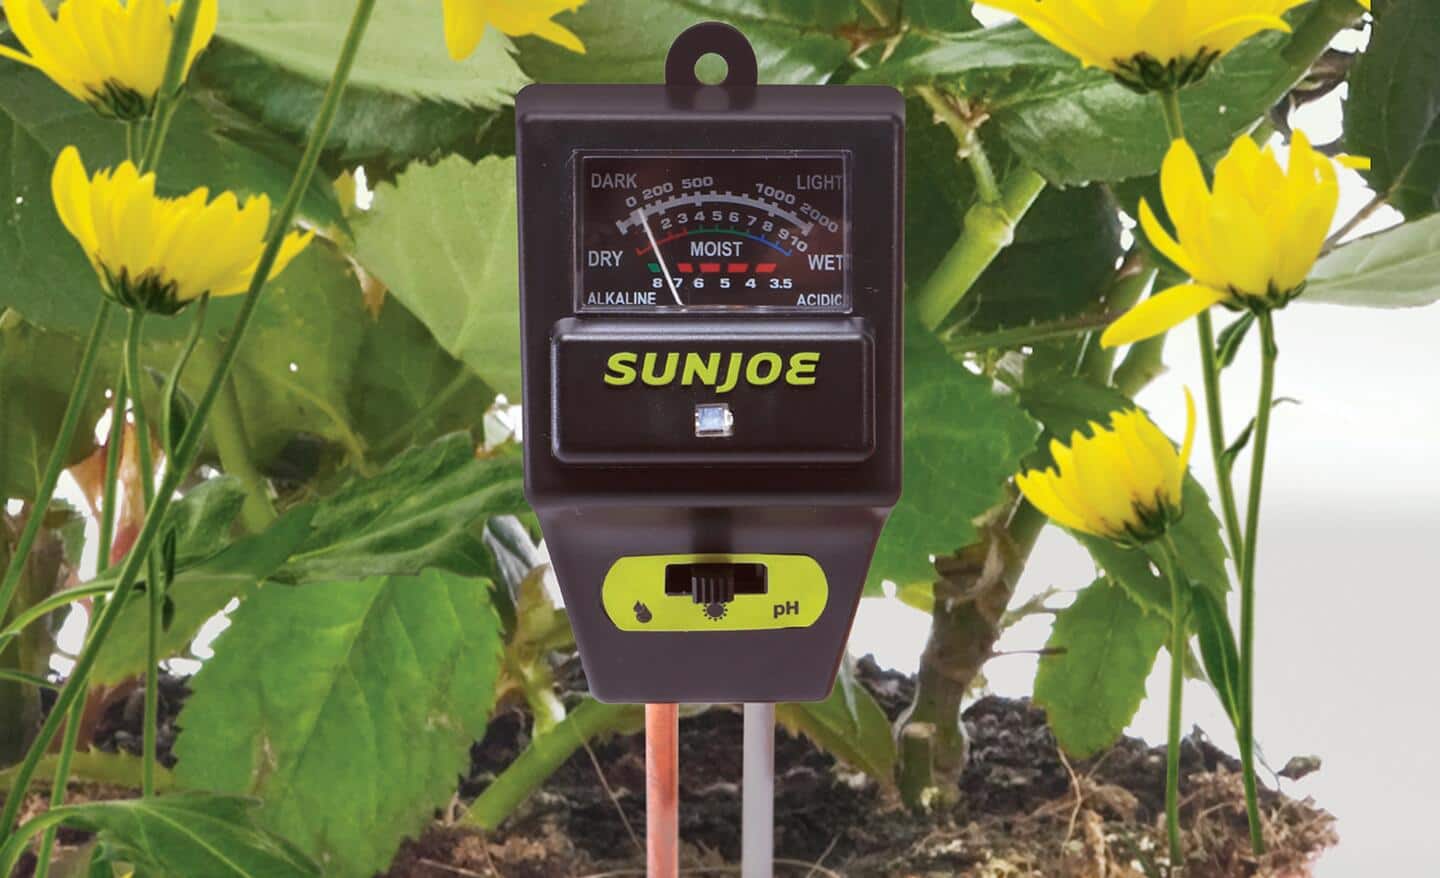 Soil test meter in a garden bed